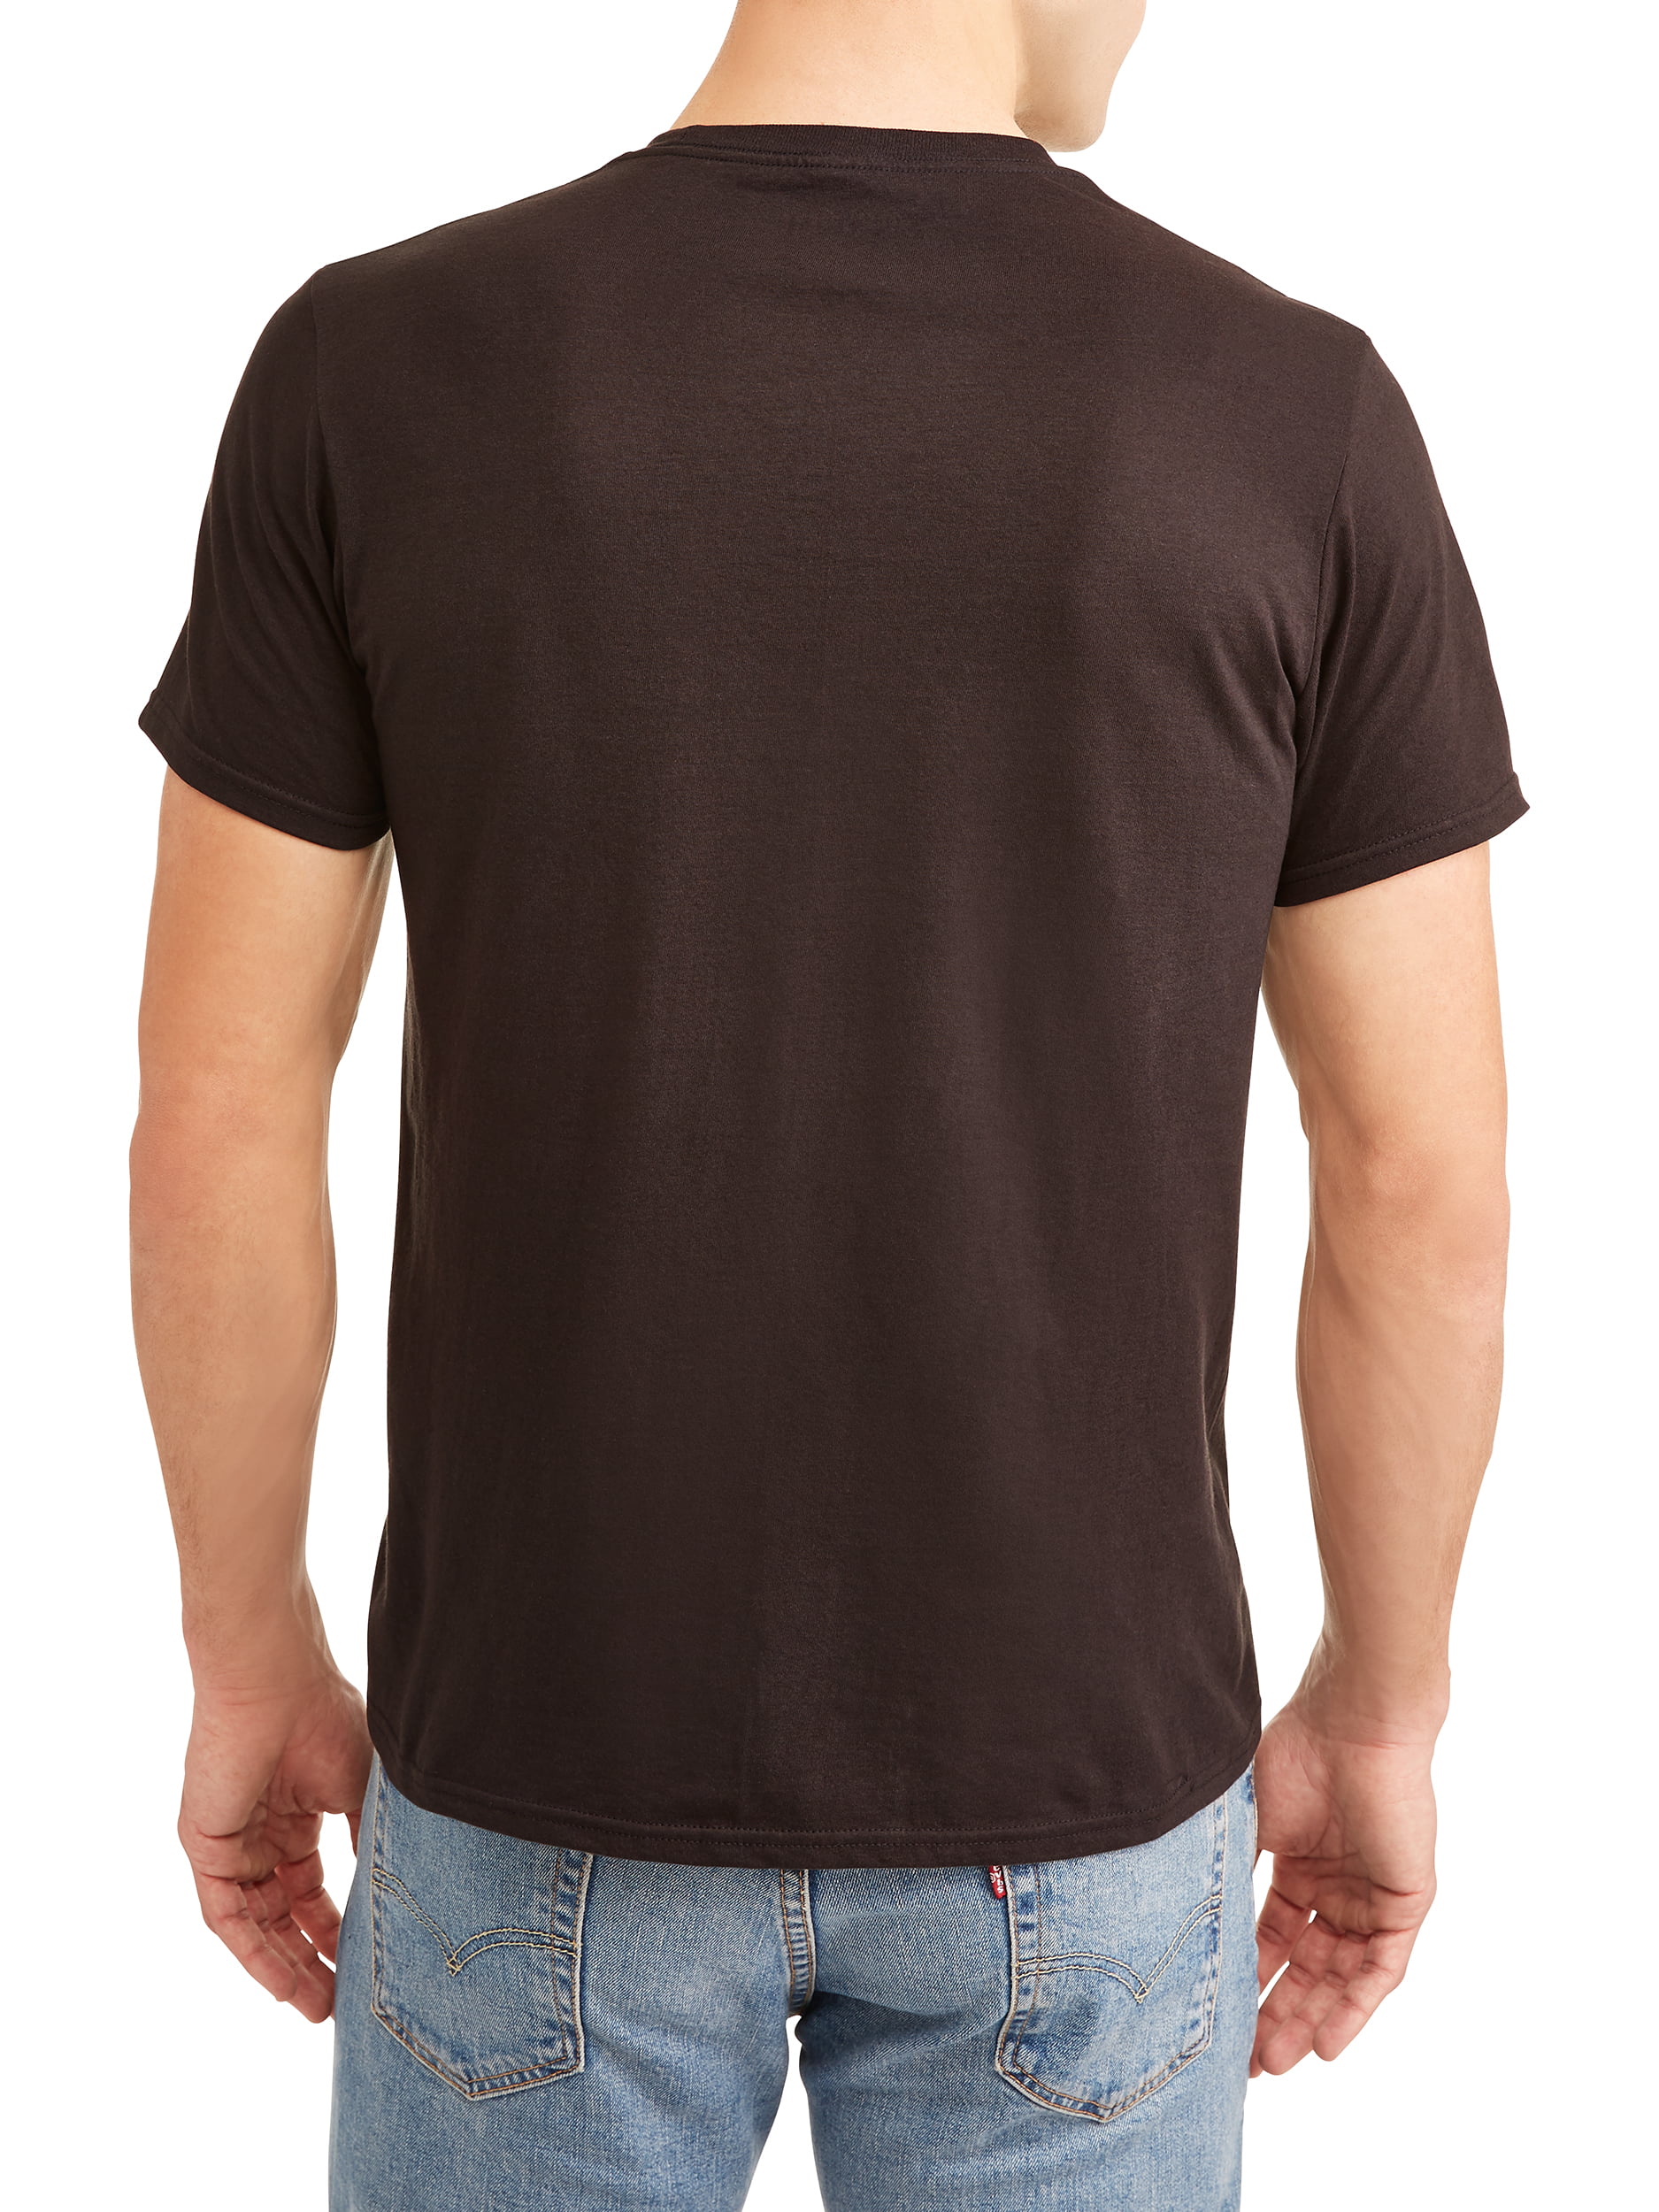 Fortnite By Epic Games T-Shirt Size S Llama Grid Black